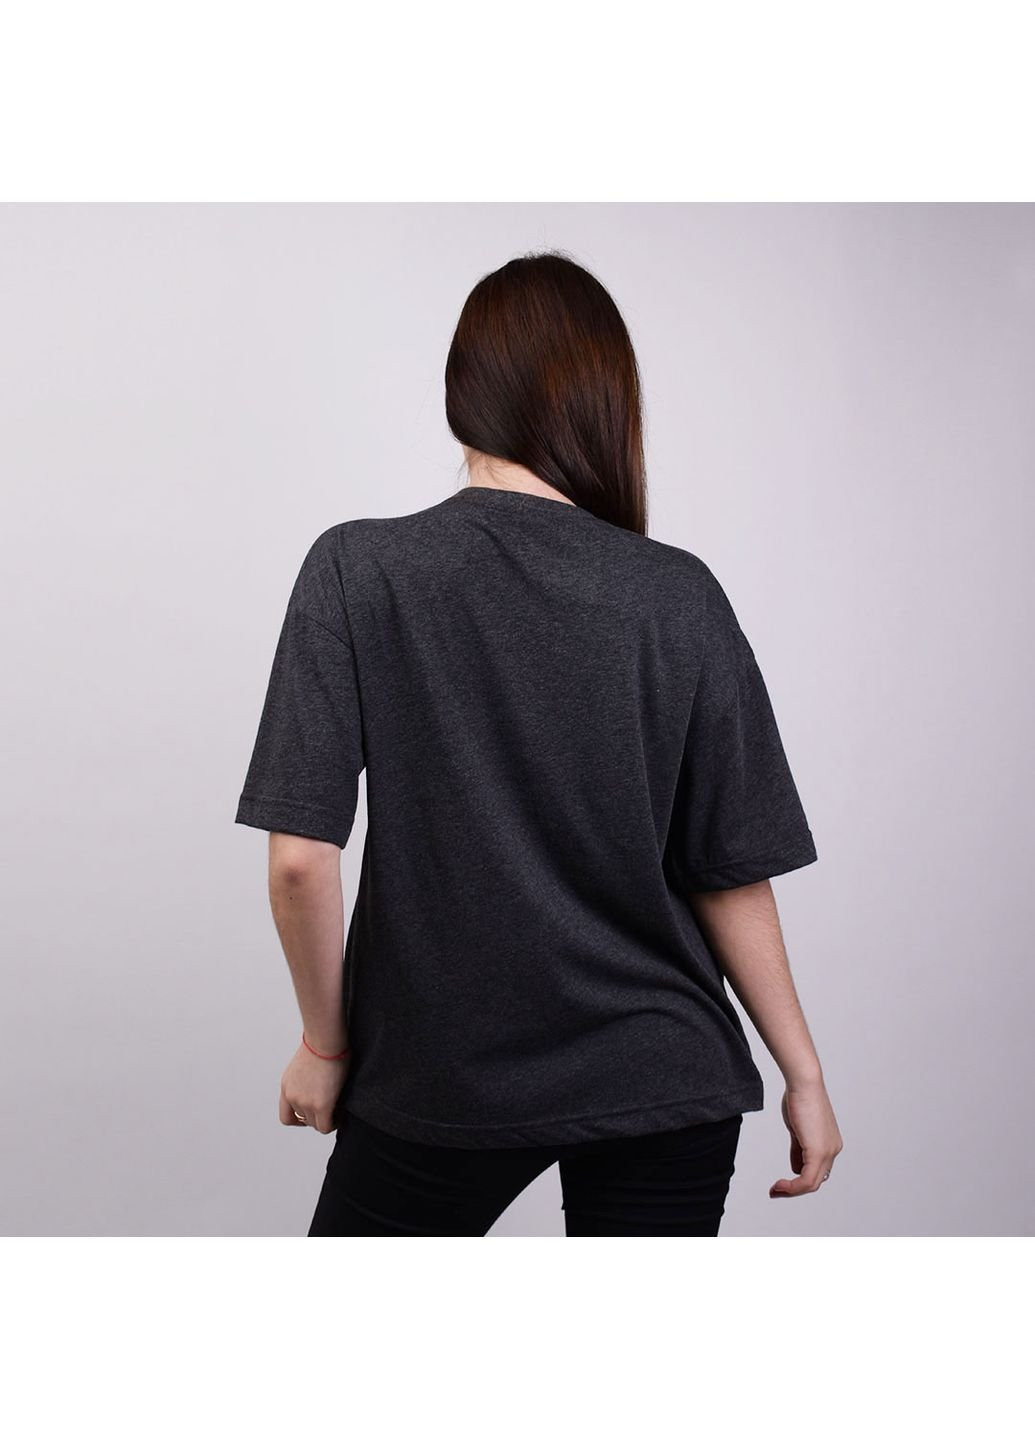 Комбинированная демисезон b-9baly-ss-21-футболка женская, меланж (темно-серый), м/л 1856 Power